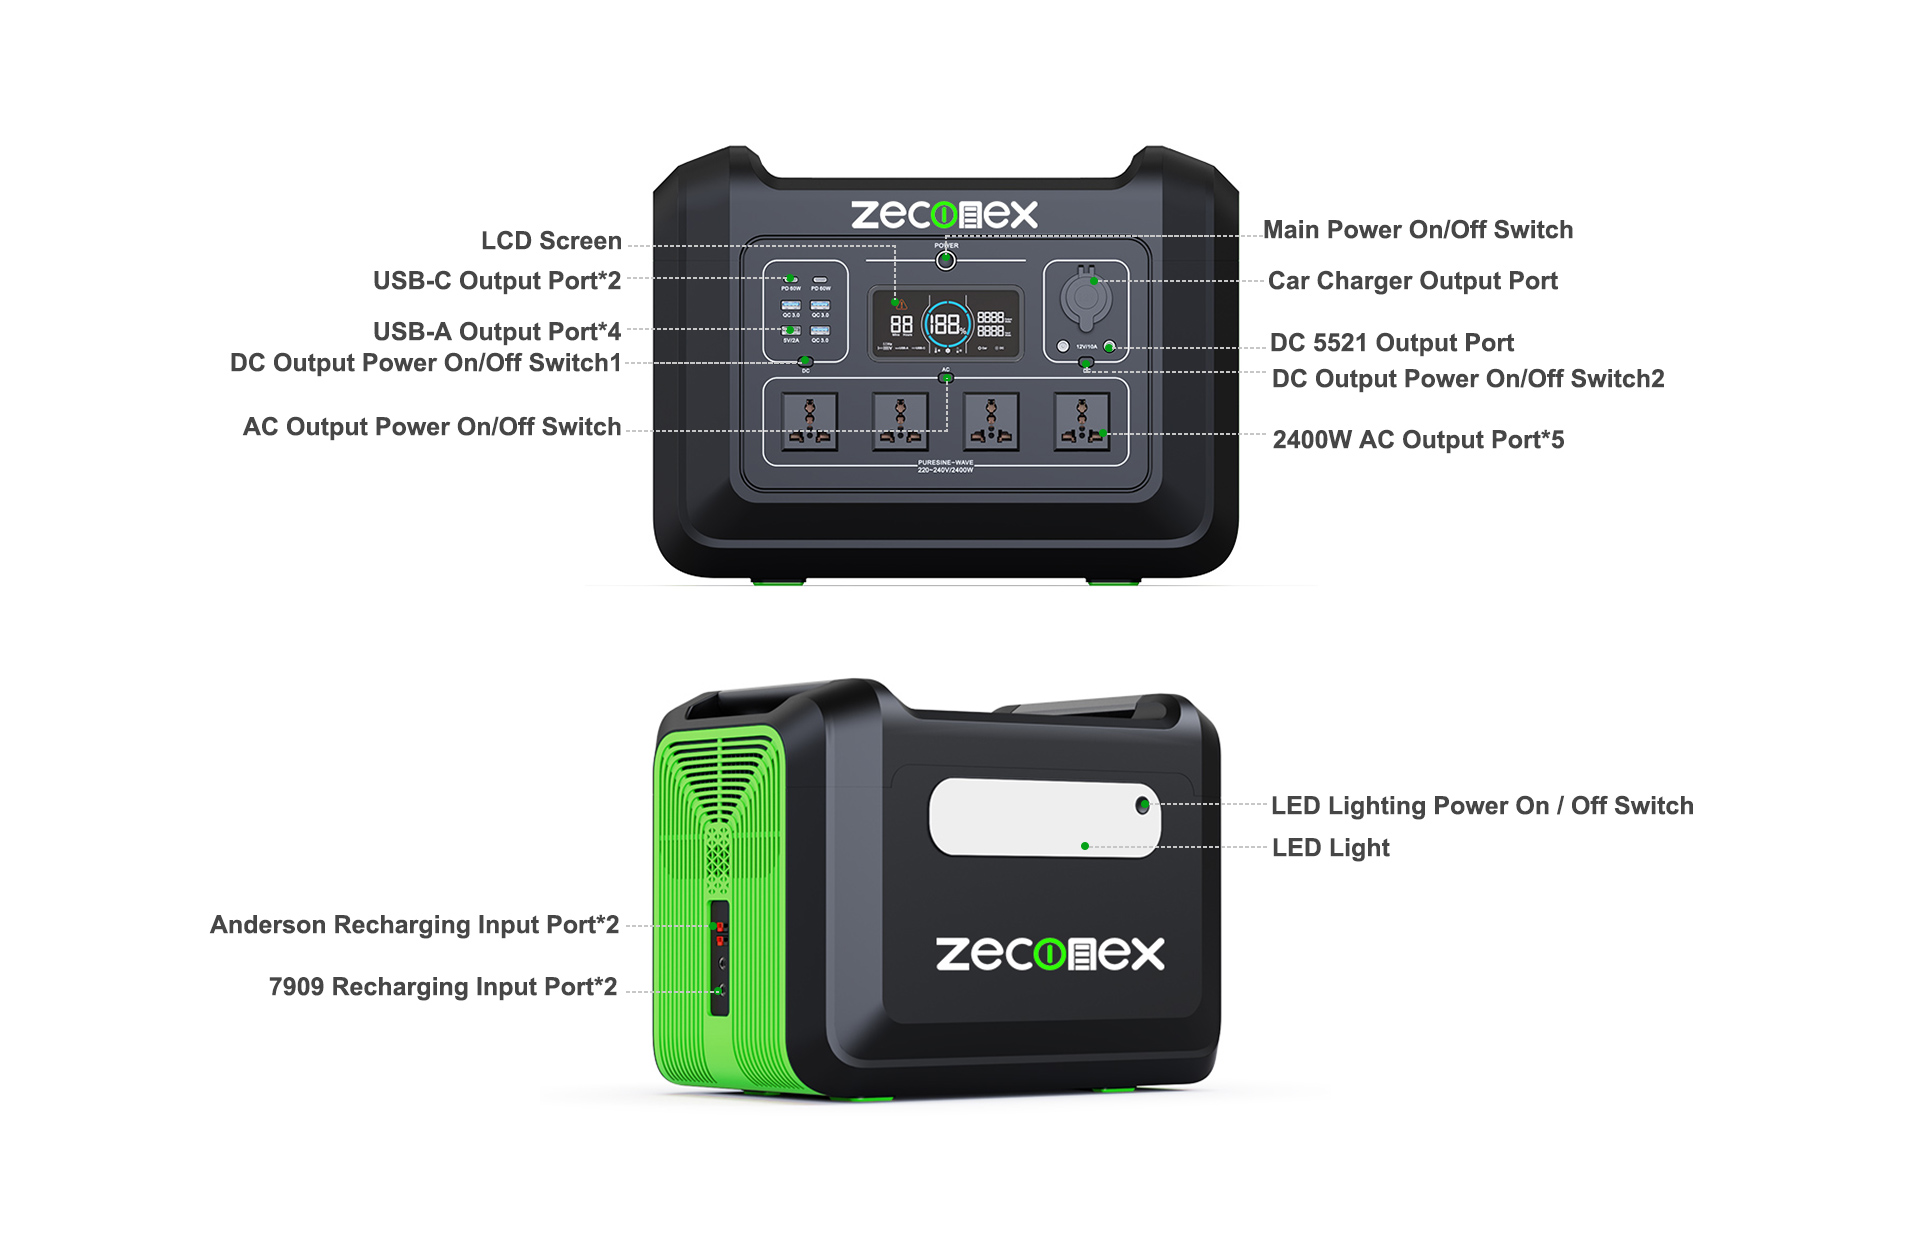 2400W ZECONEX Portable Power station 01